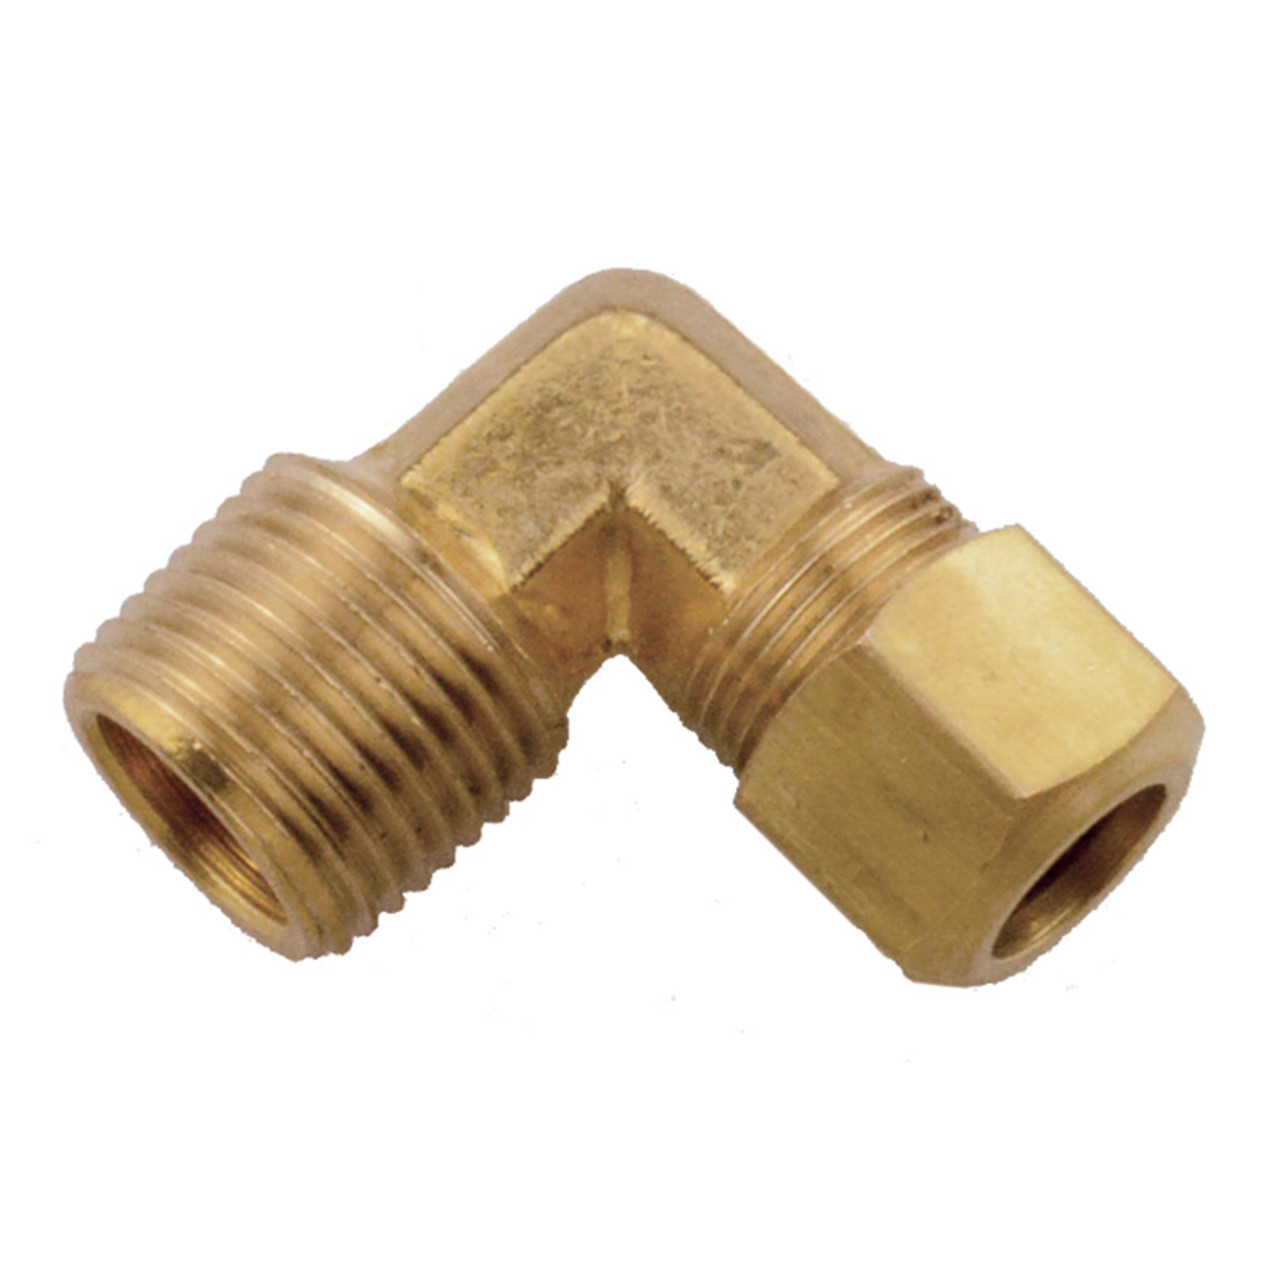 1/8 x 1/8" Brass Male NPT - Compression 90° Elbow   G6096-02-02